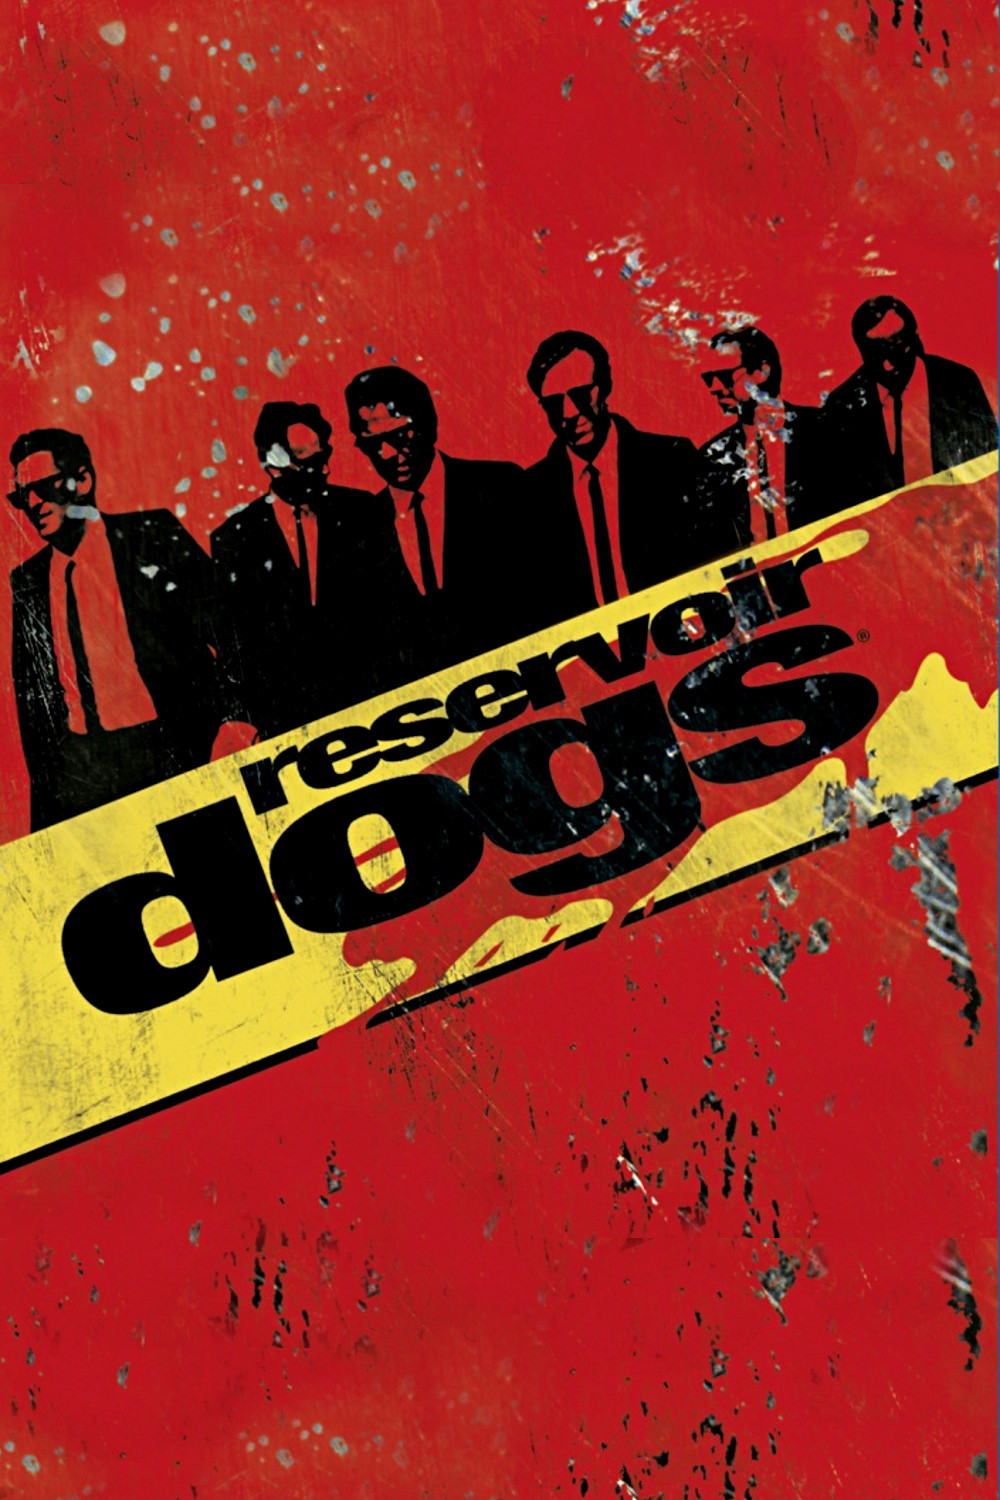 Reservoir Dogs Poster 26: Full Size Poster Image